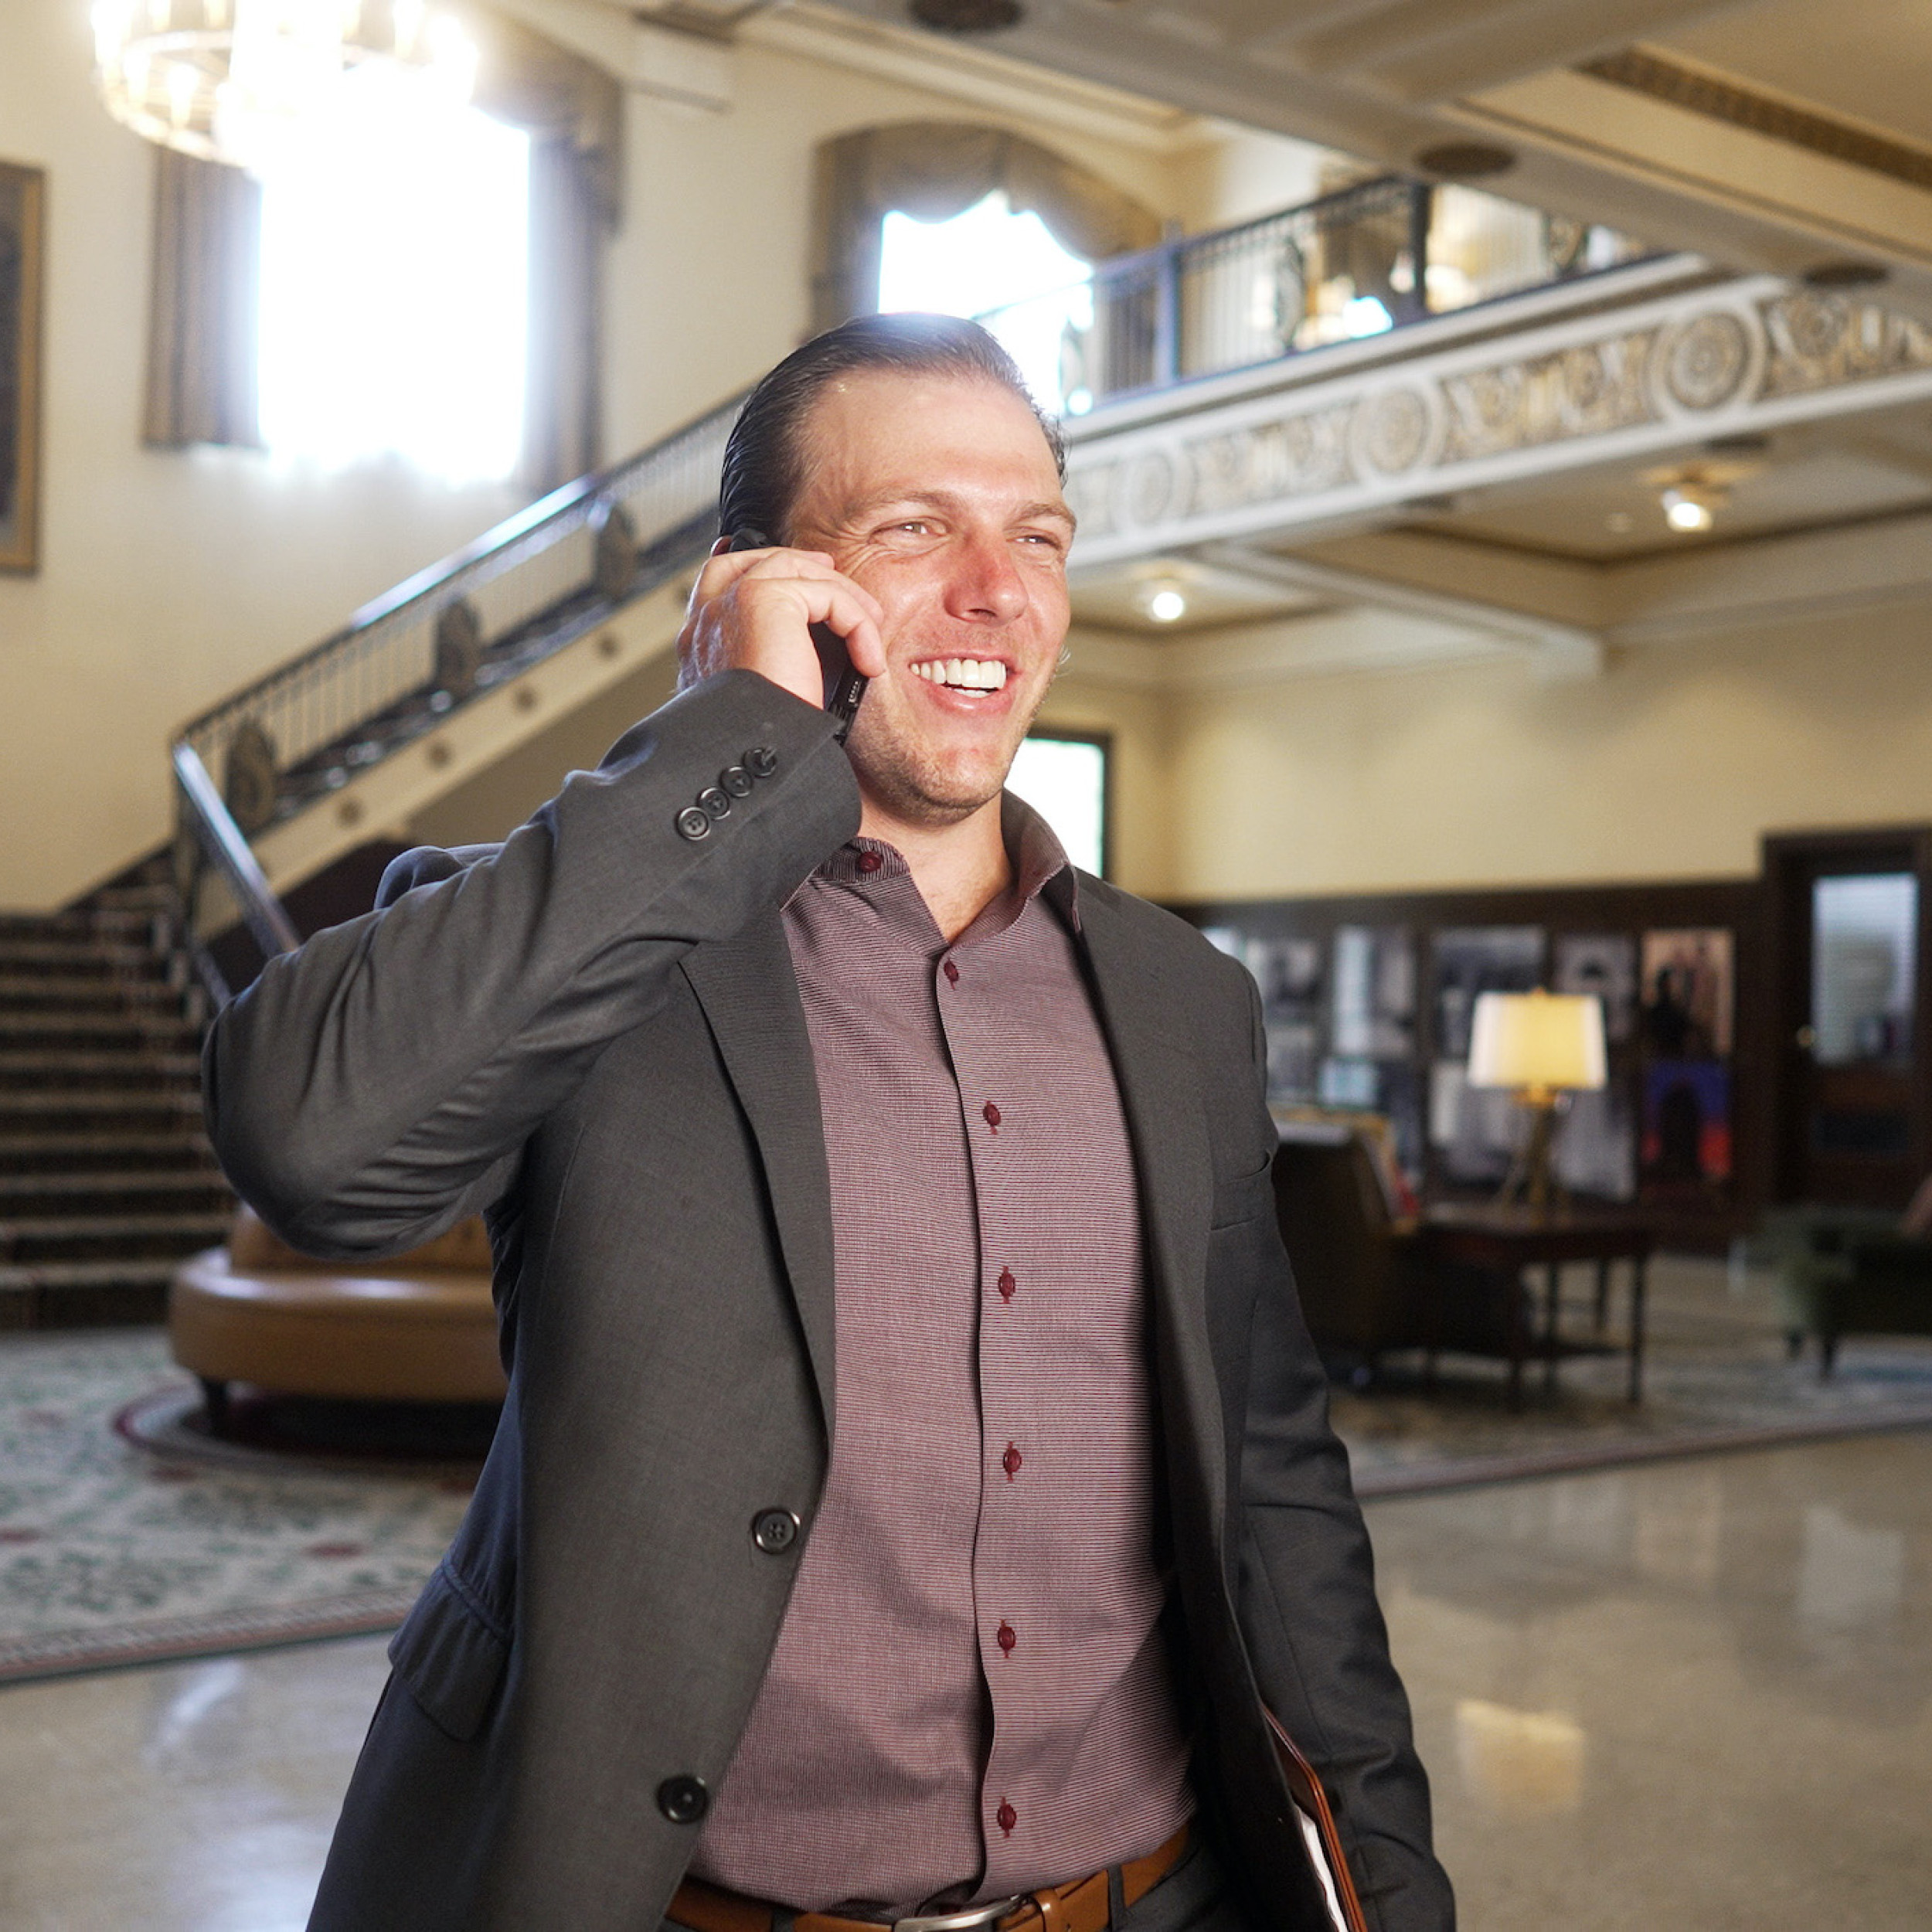 Man talking on the phone walking through a lobby